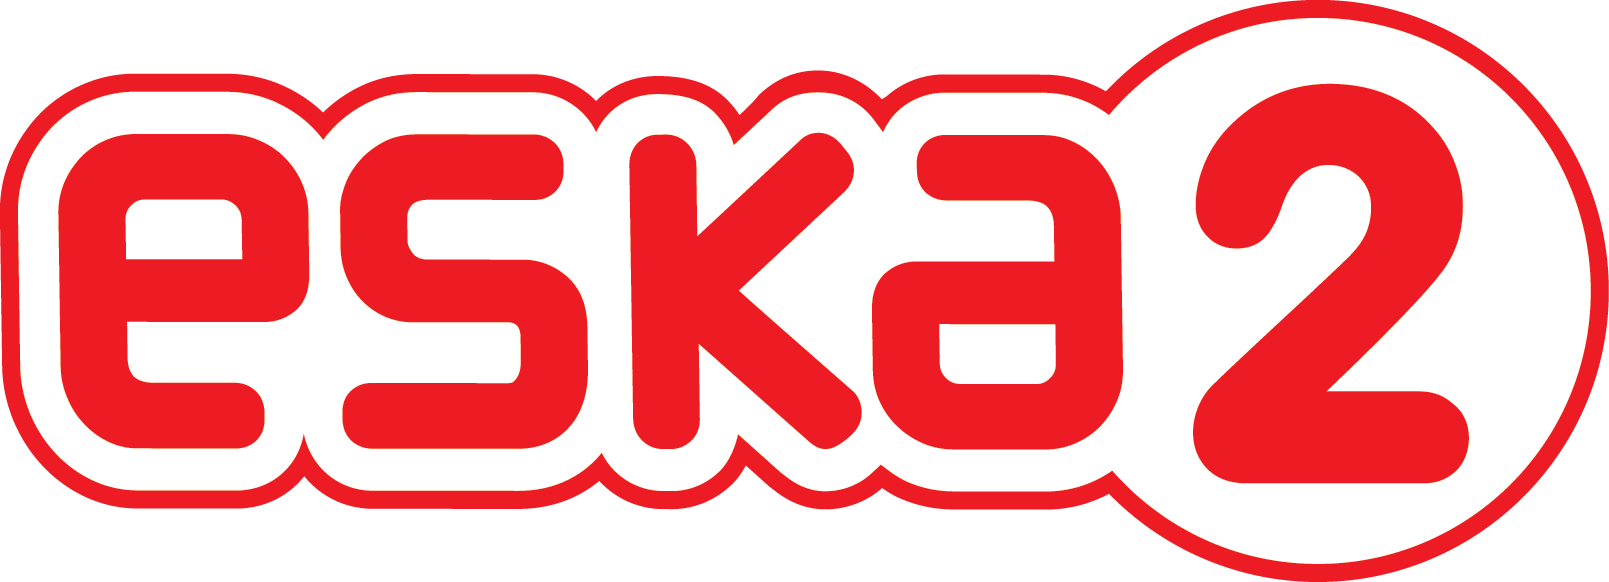 ESKA2 logo